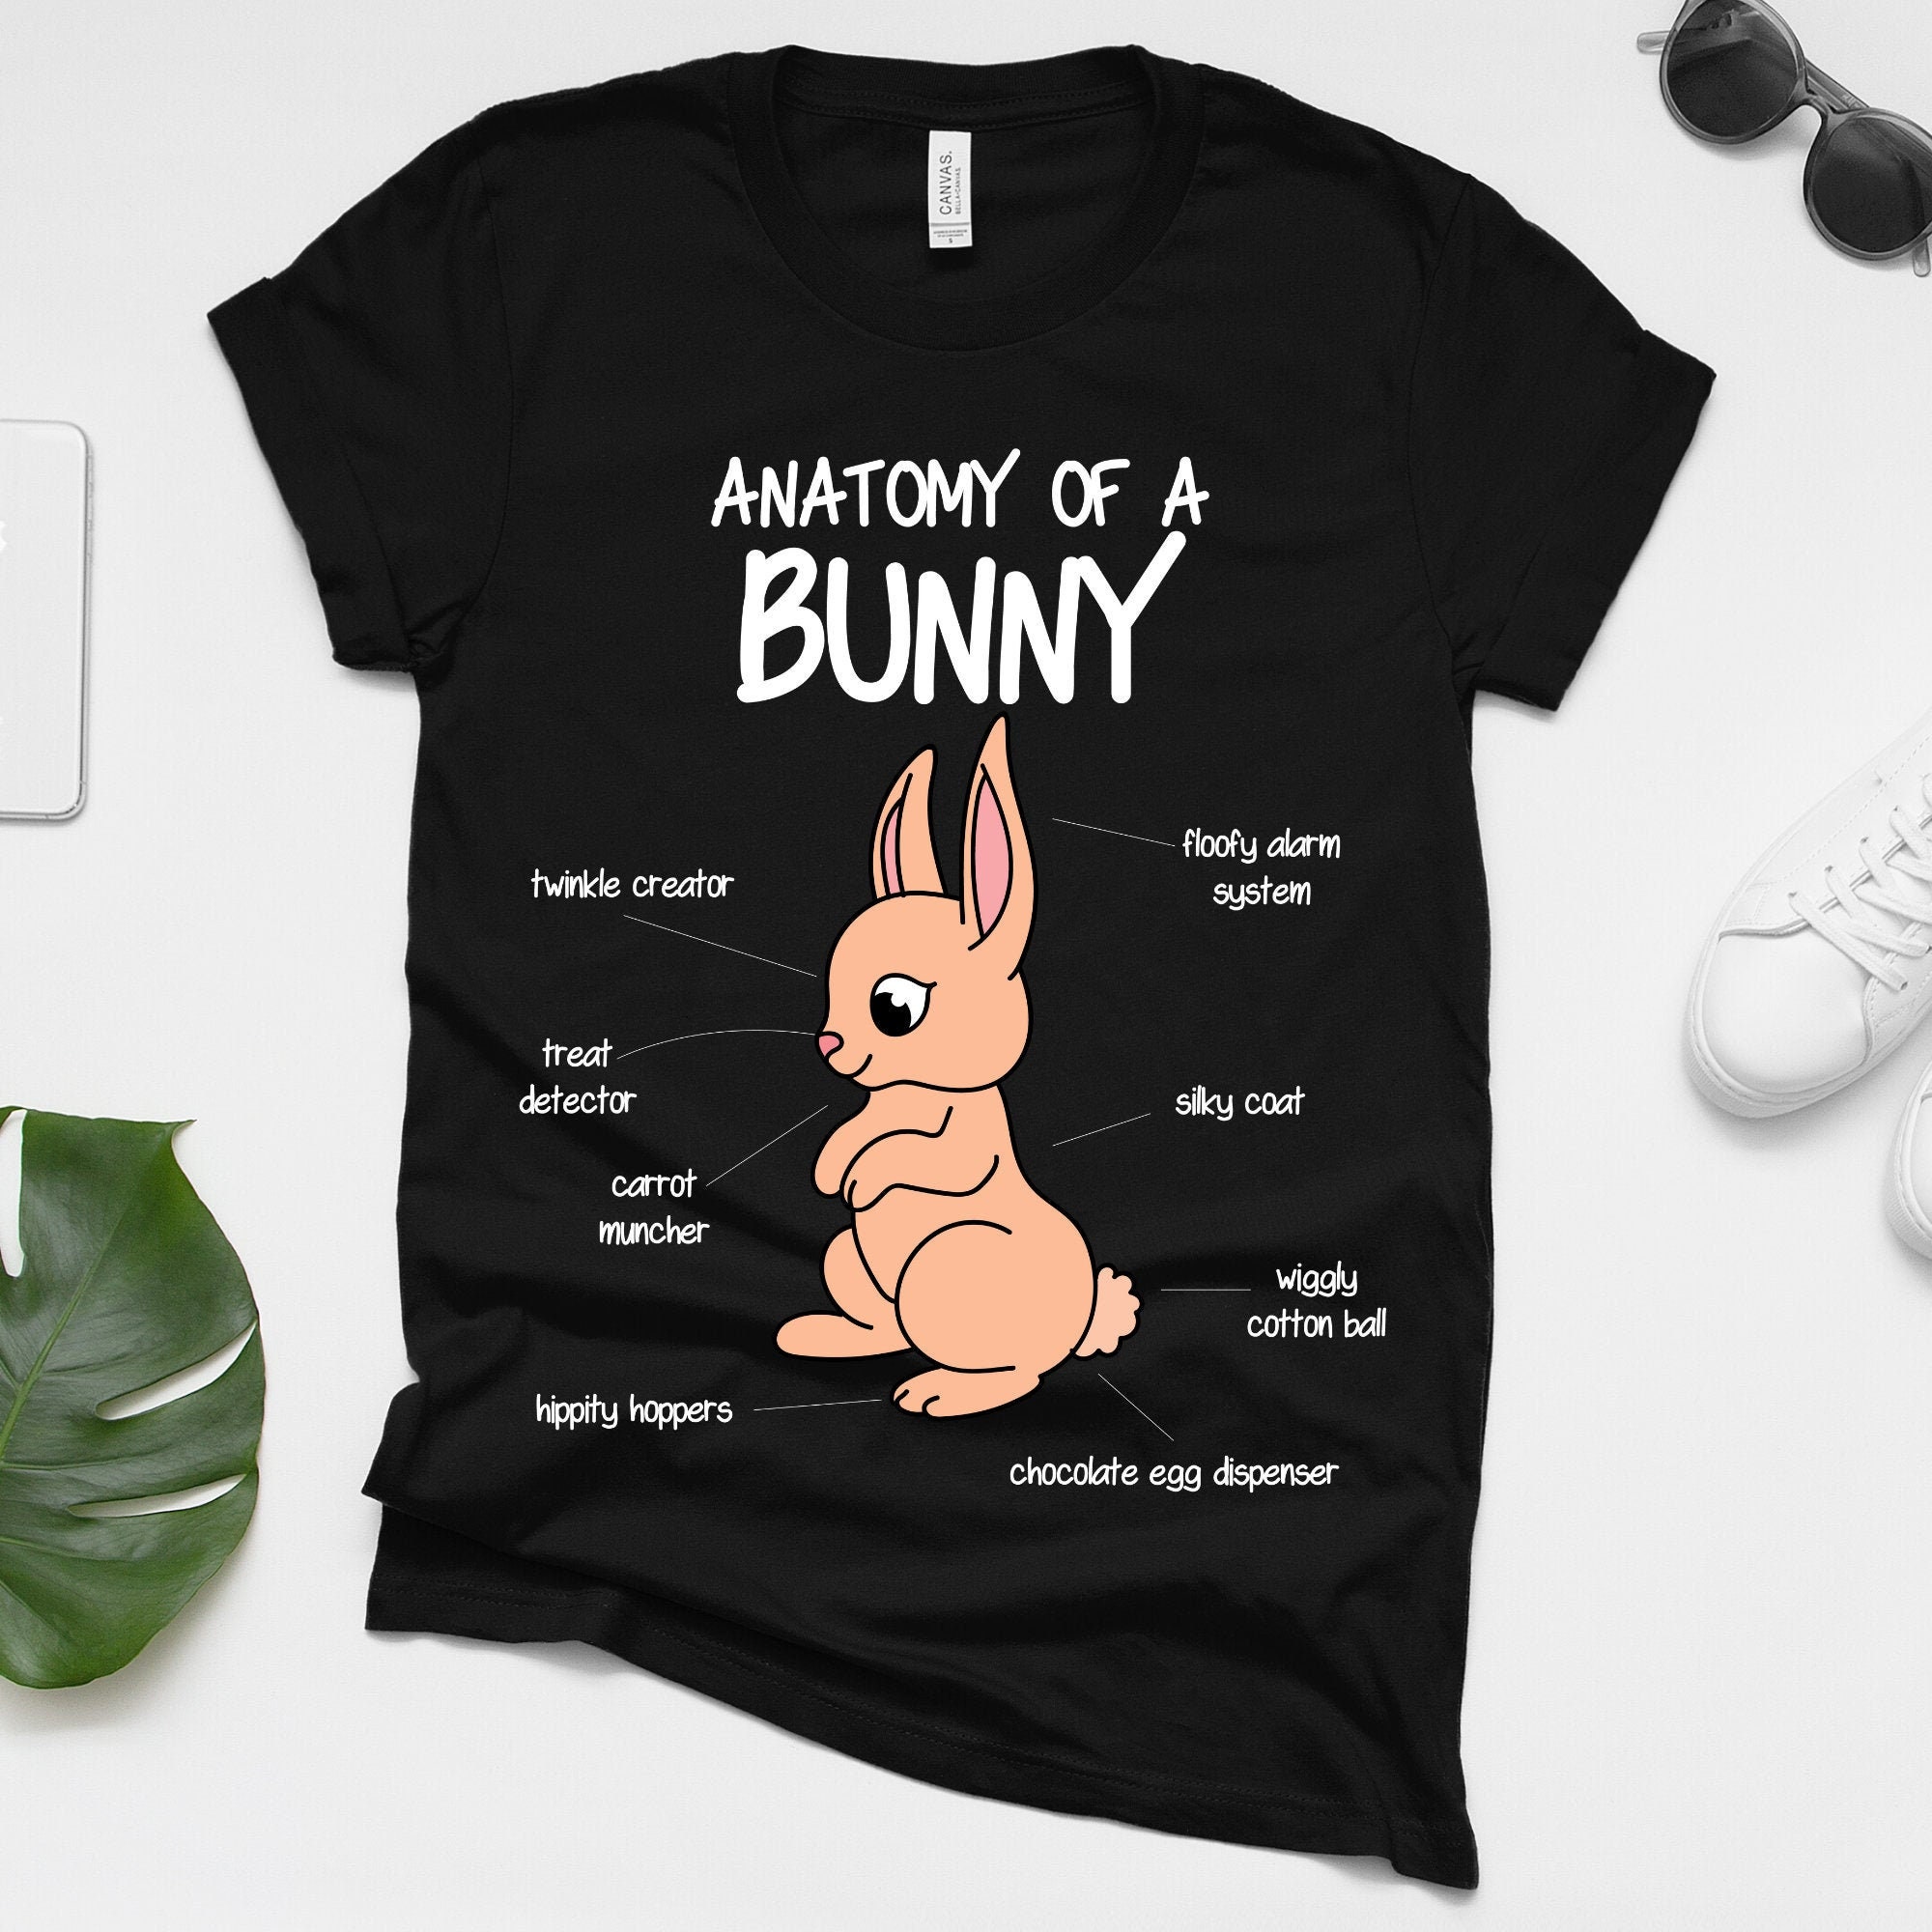 Easter Shirt Easter Bunny Shirt Bunny Shirt Bunny Lover Shirt Cute Bunny Shirt Animal Lover Shirt. Rabbit Lover Shirt